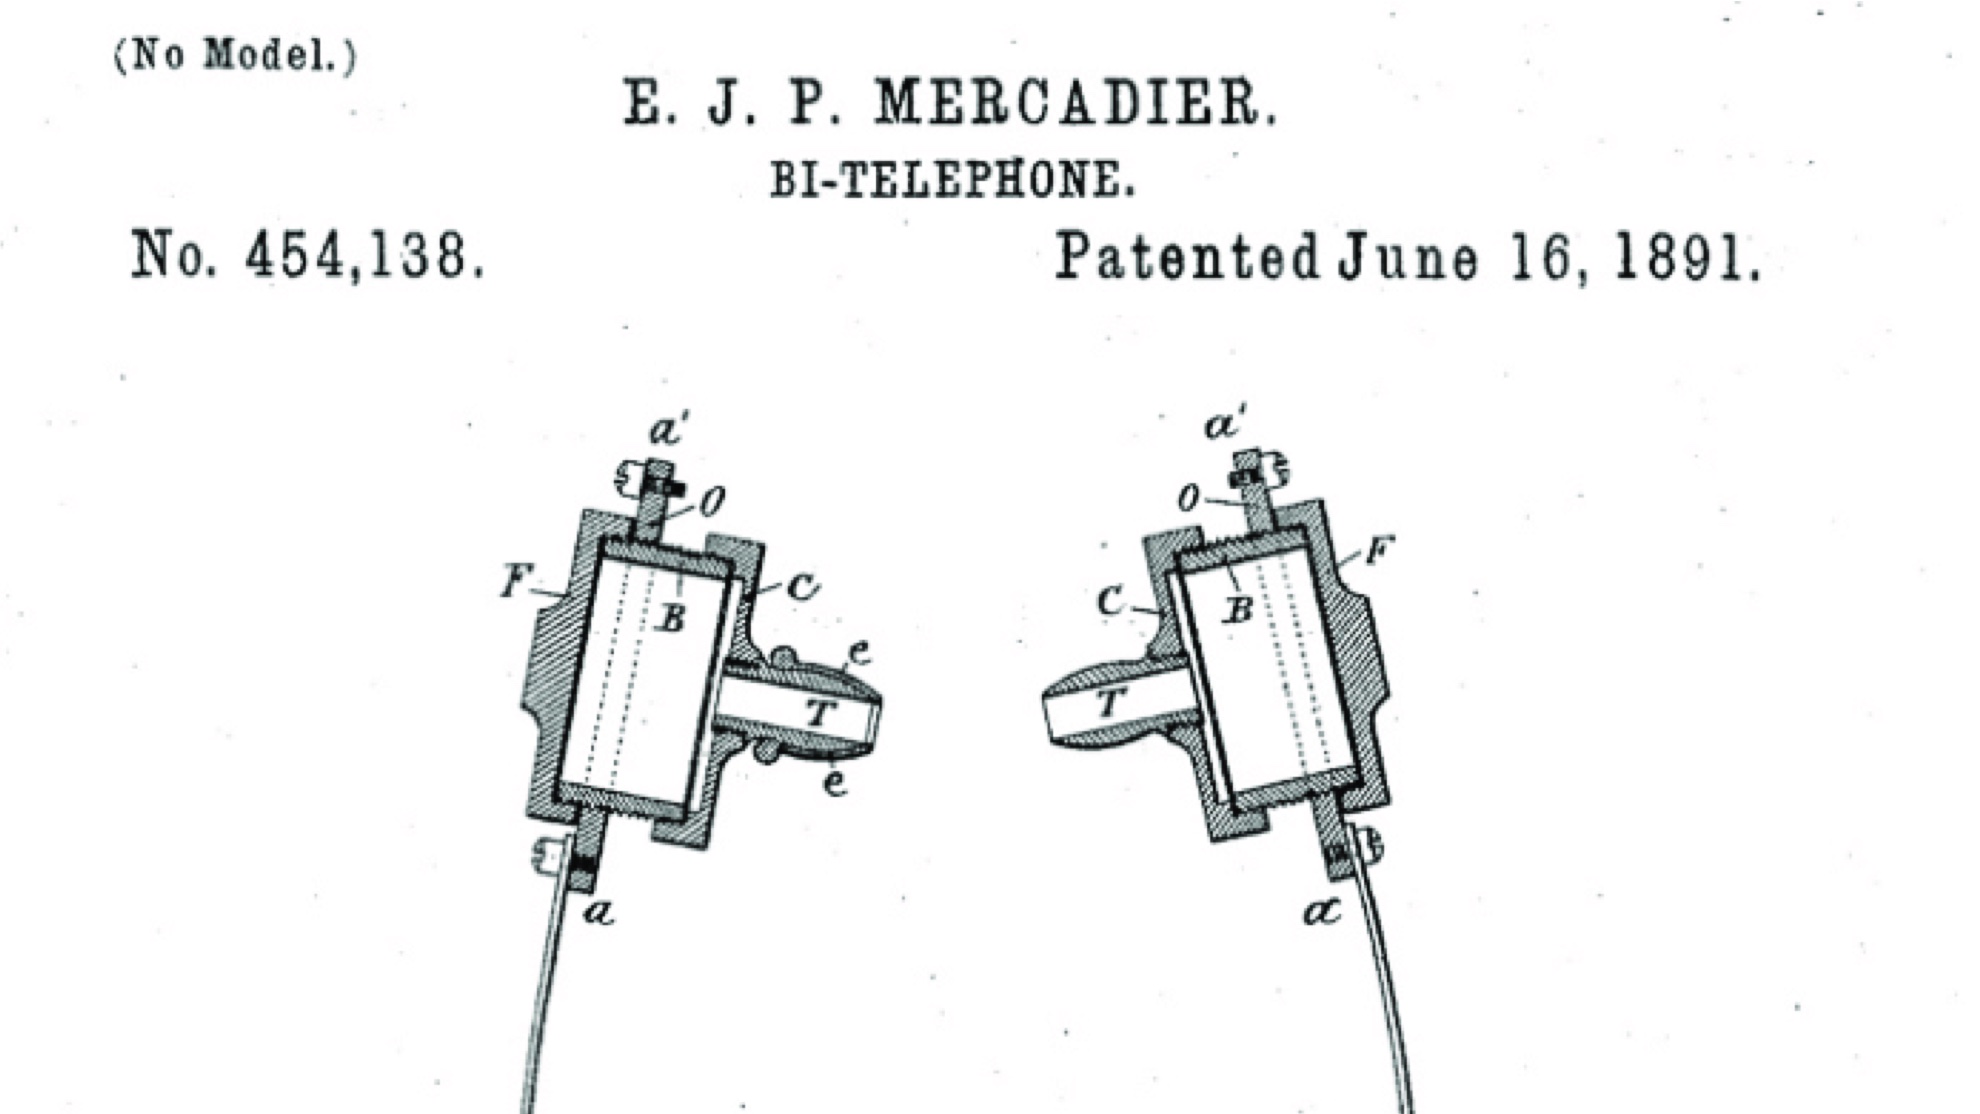 Biphone patent image